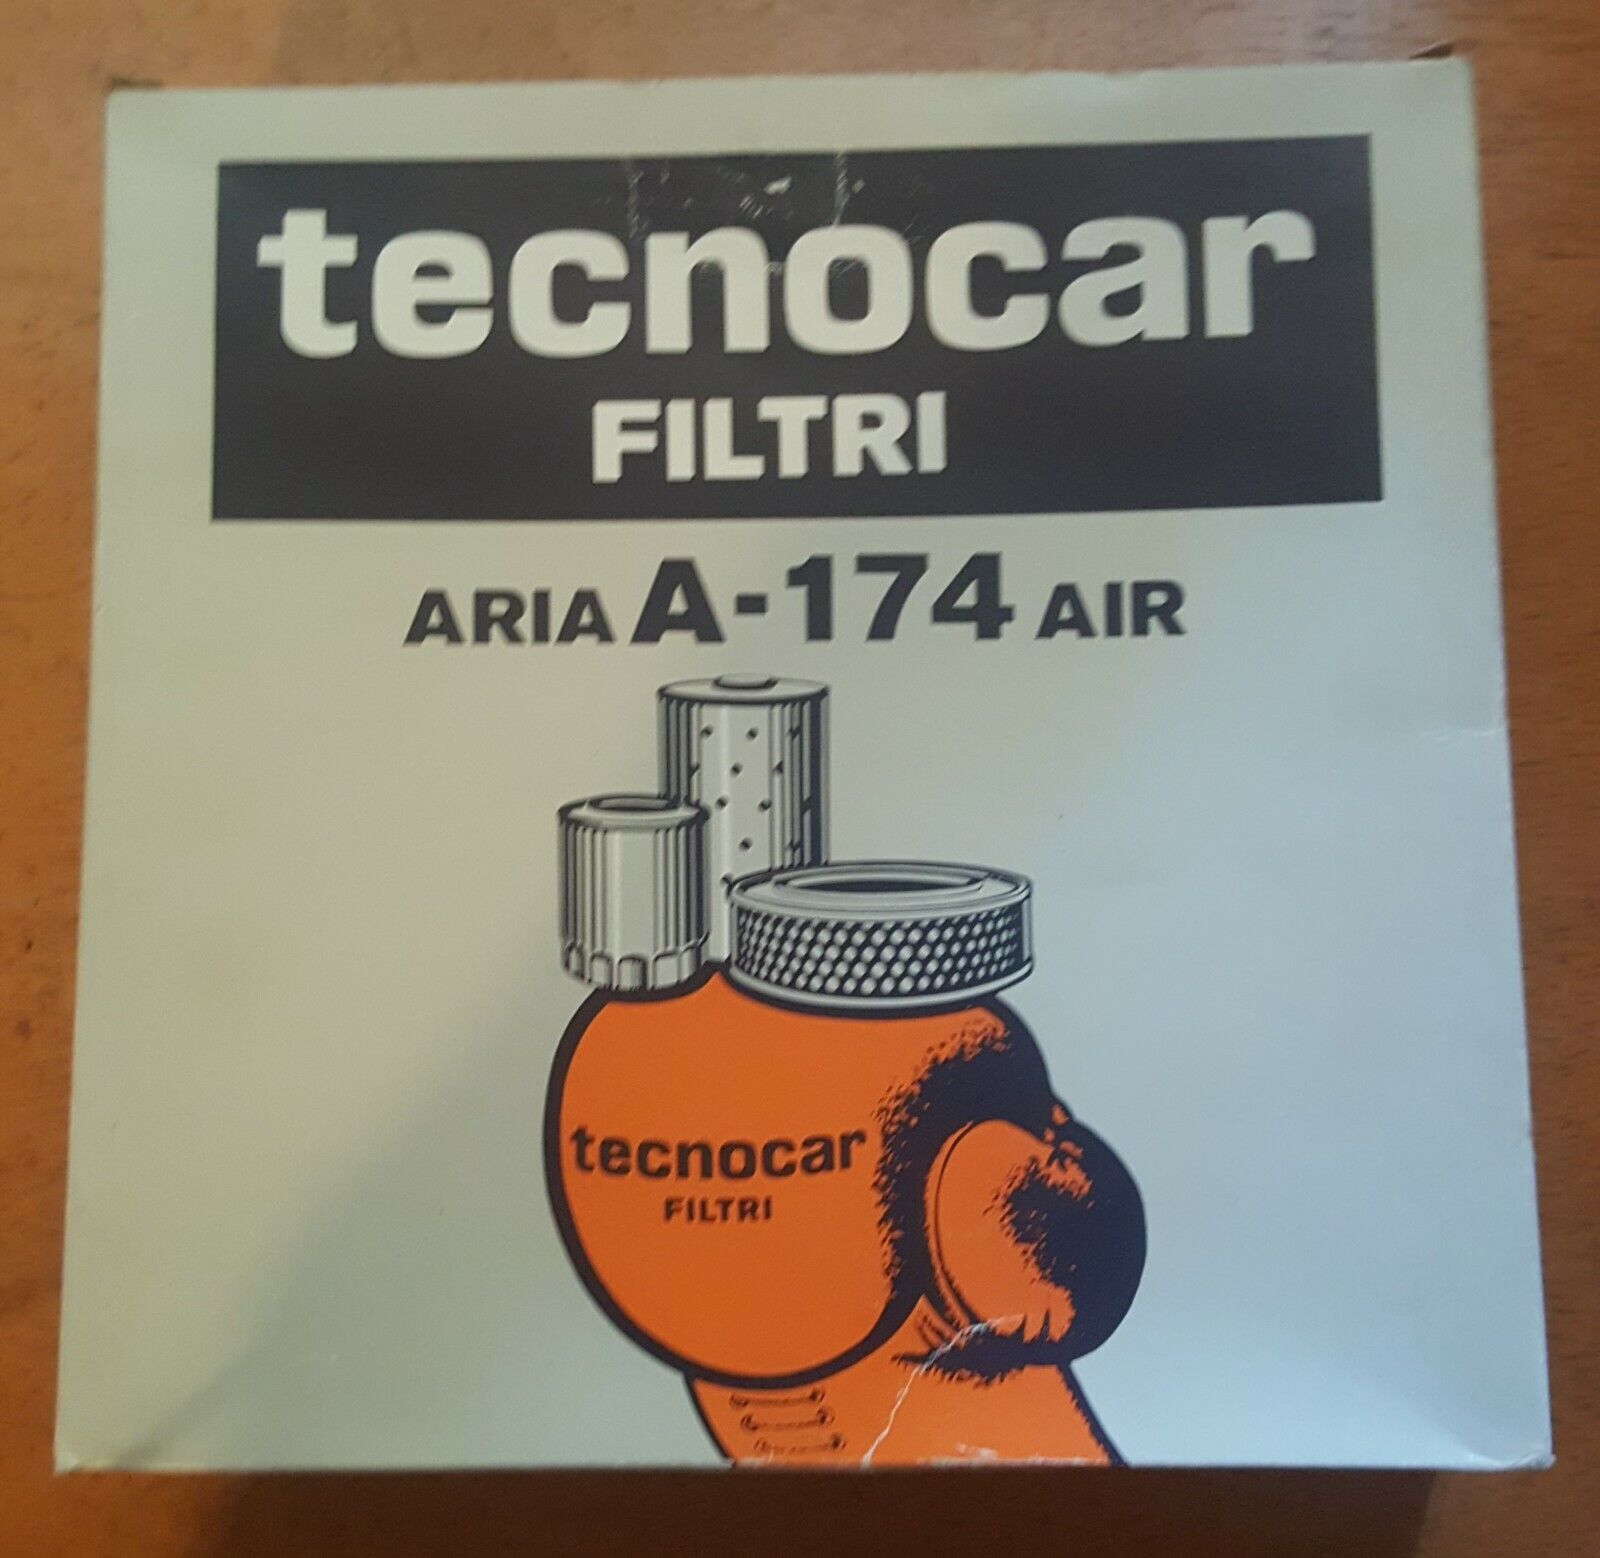 Fiat X19 X1/9 1500 series 2 (carburettor) Air Filter element. Technocar A-174